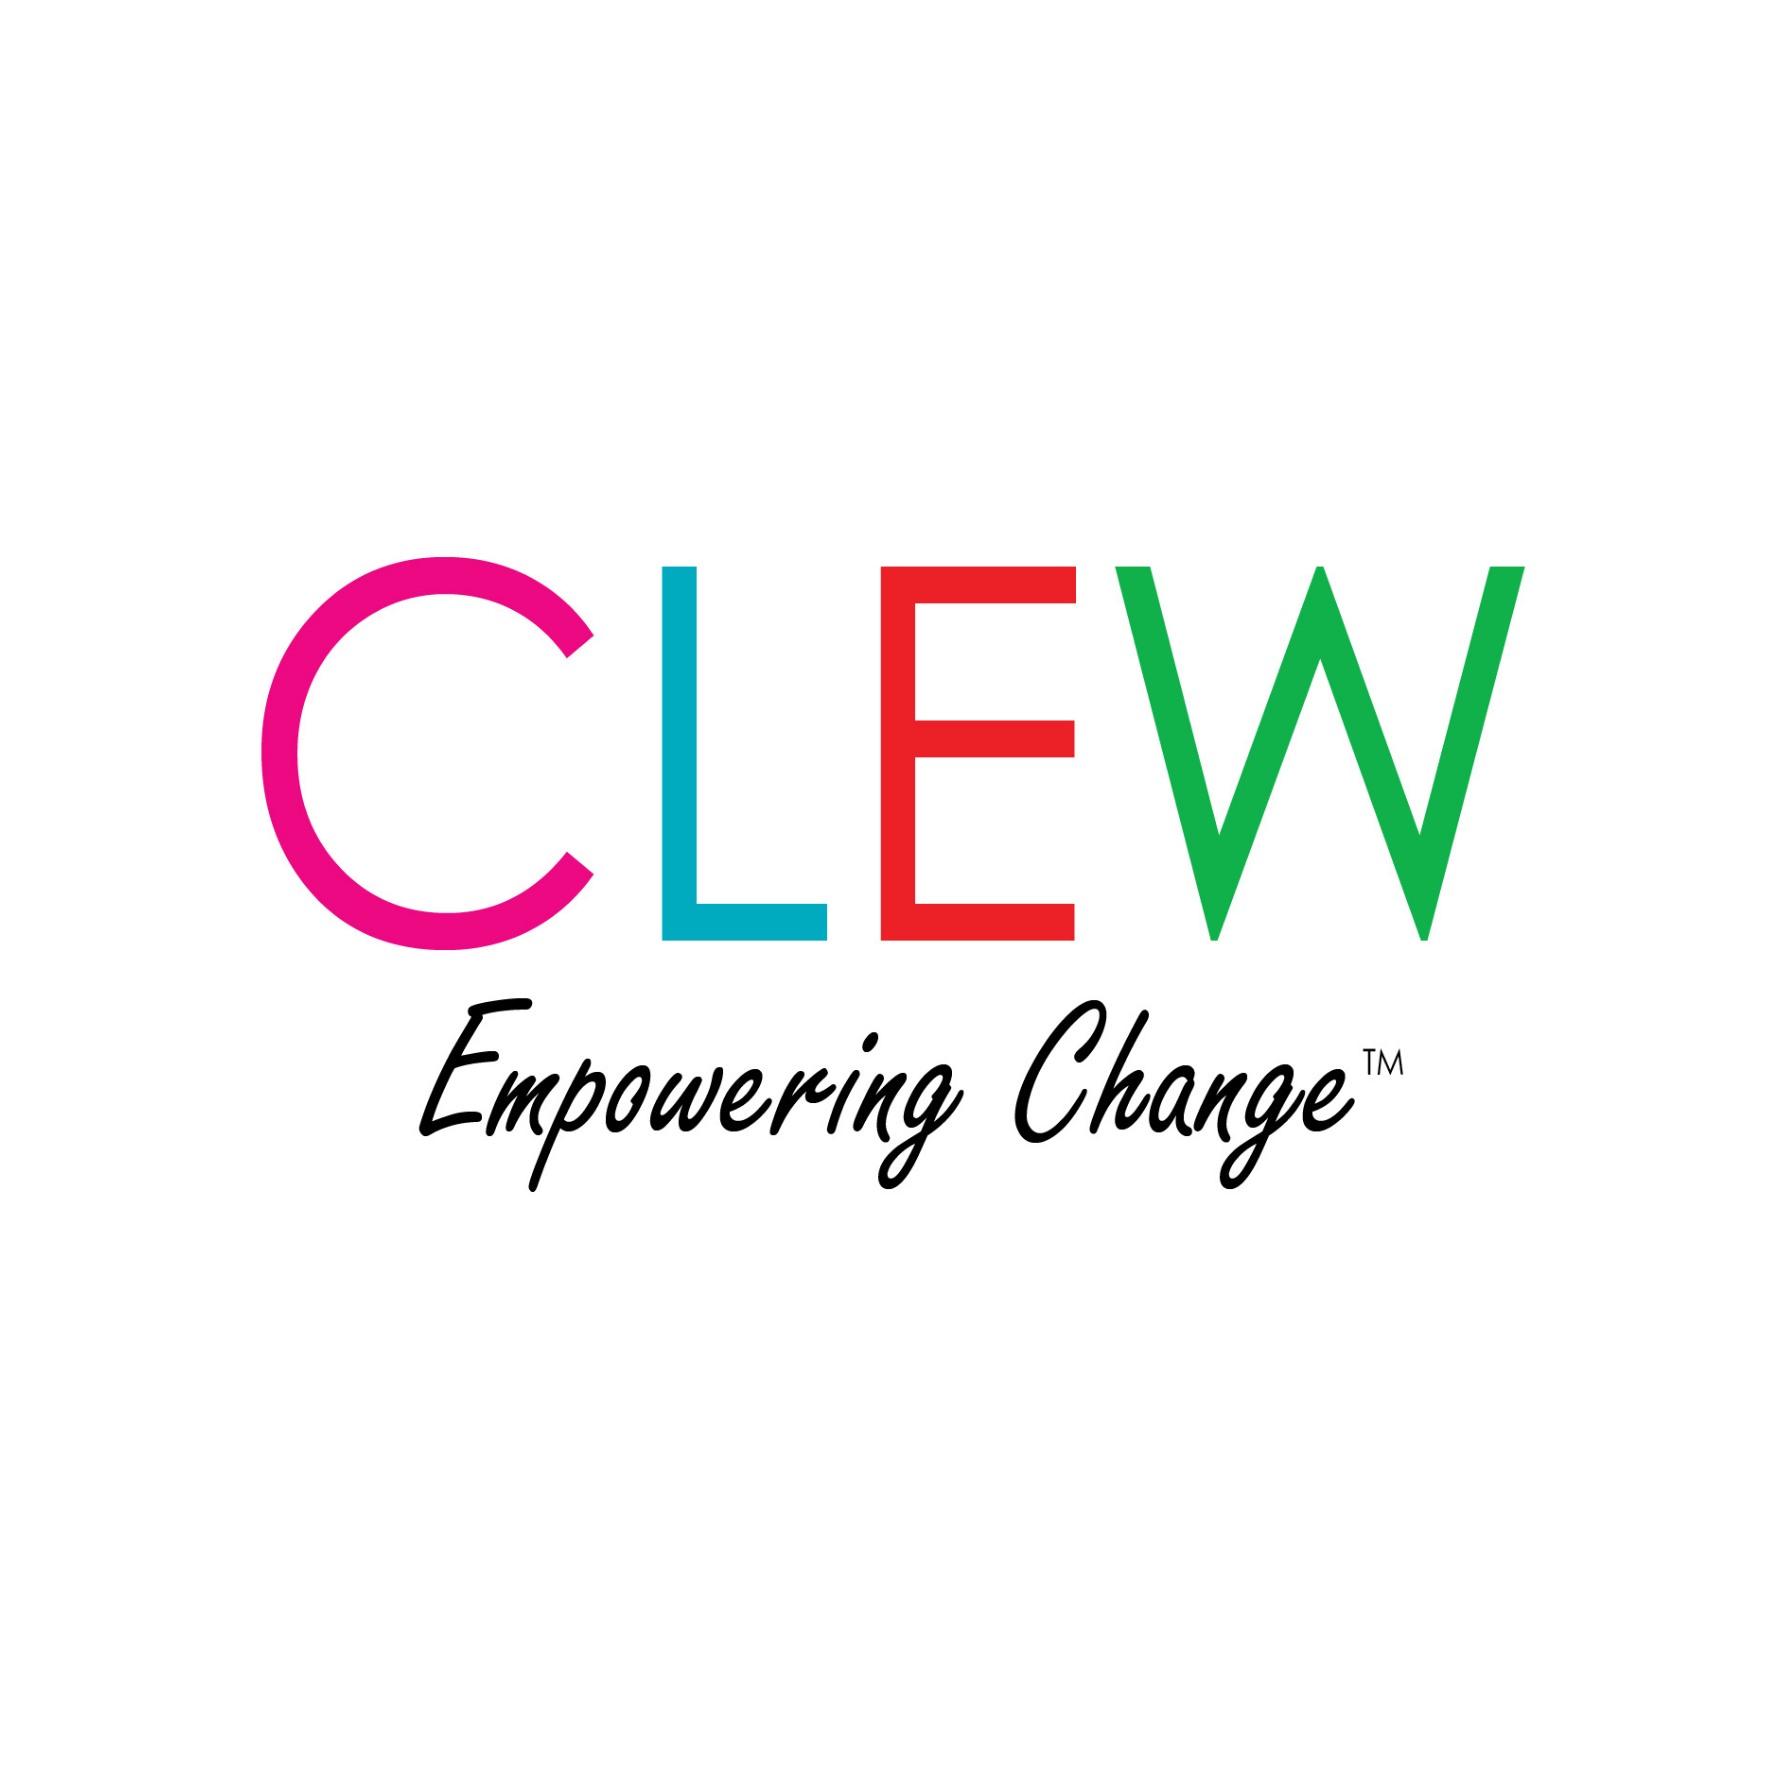 CLEW logo (15 x 15 cm)